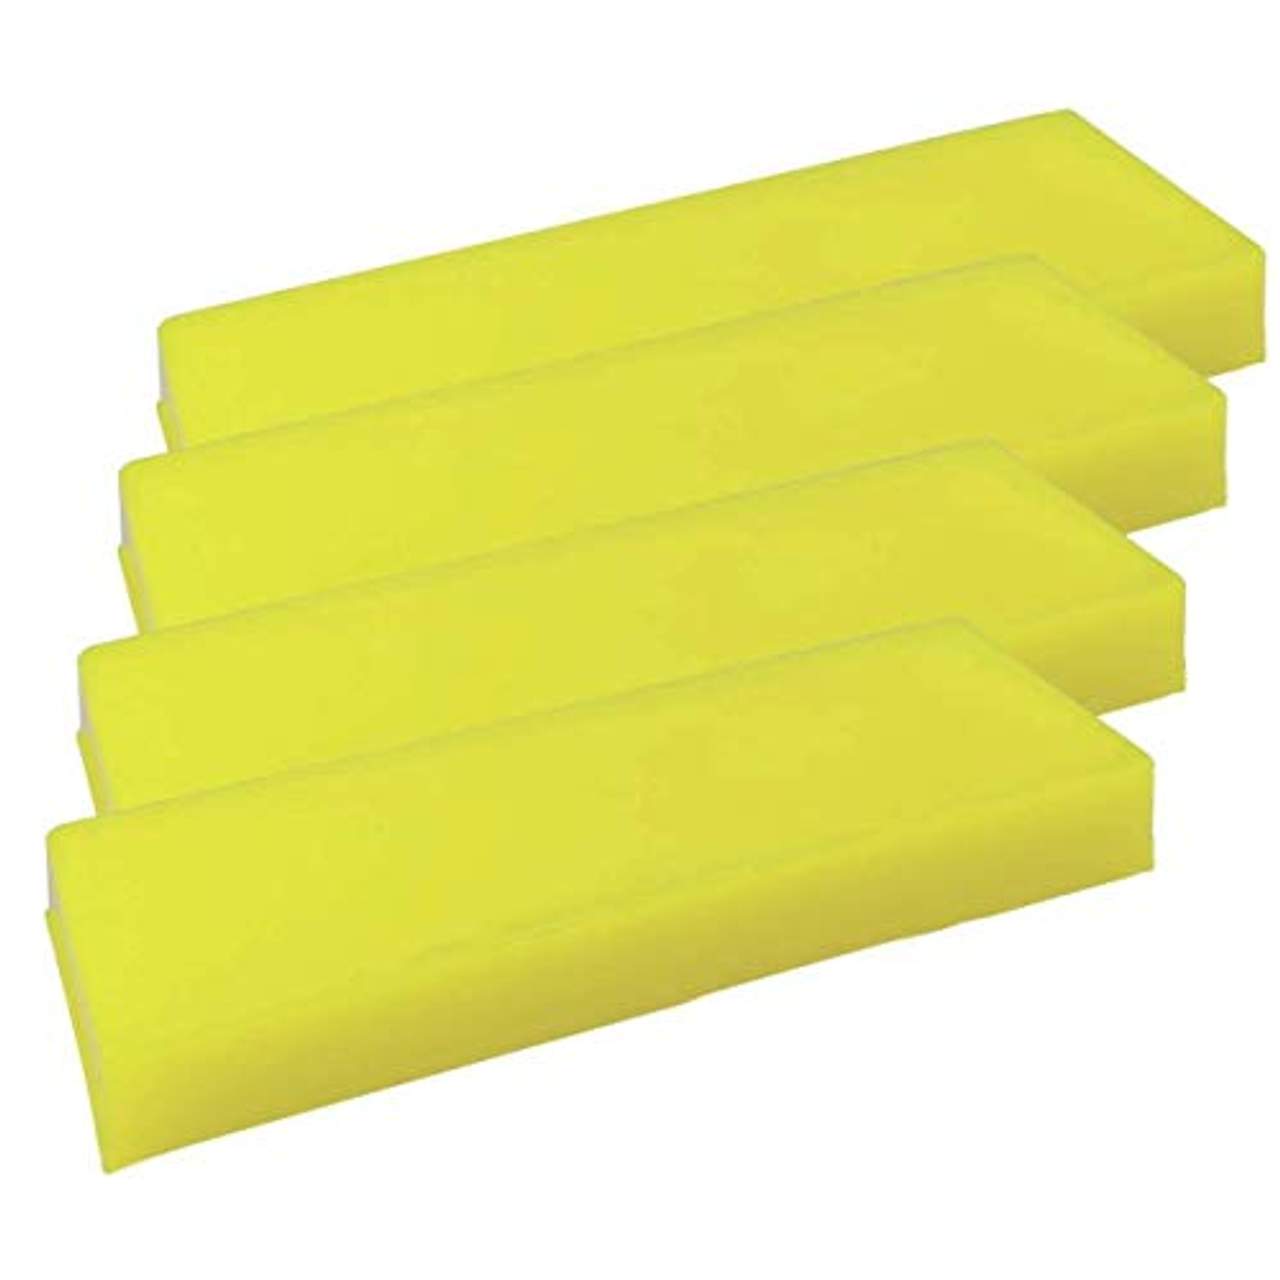 SkinStar Universal Wachs gelb Bügelwachs Ski Wax 4x250 g